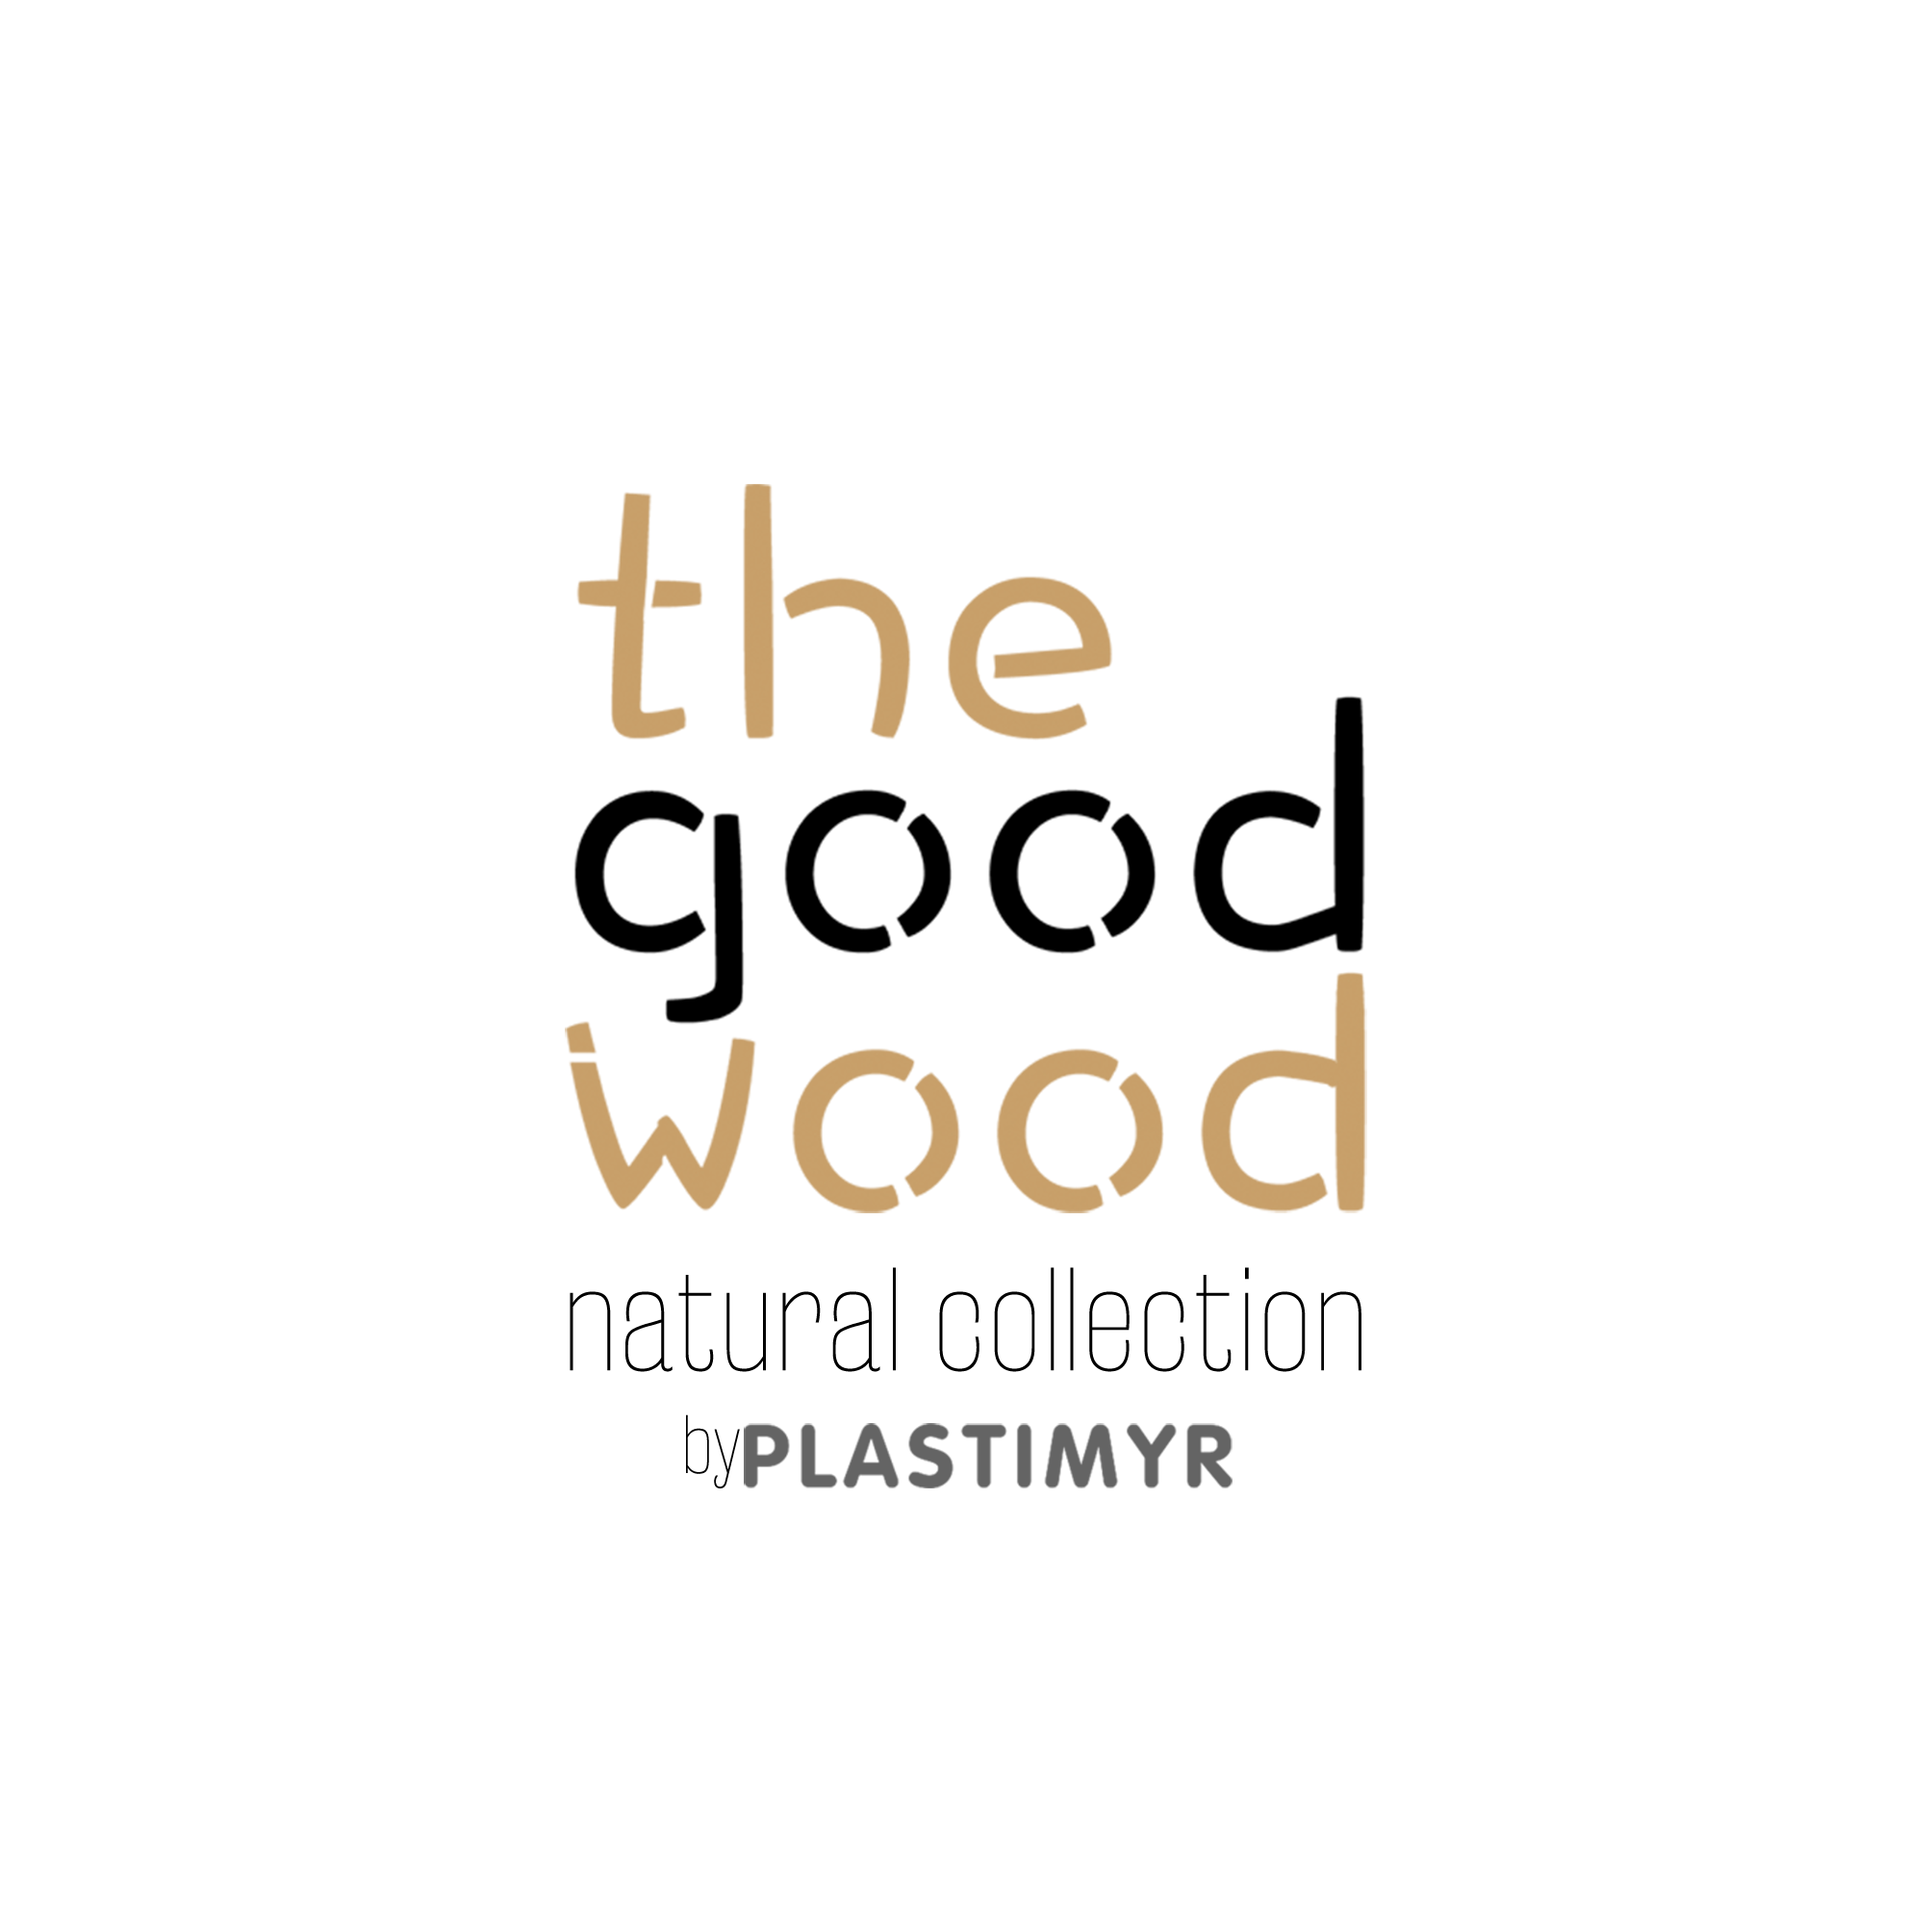 Comprar Barrera de seguridad Plastimyr de madera The Good Wood